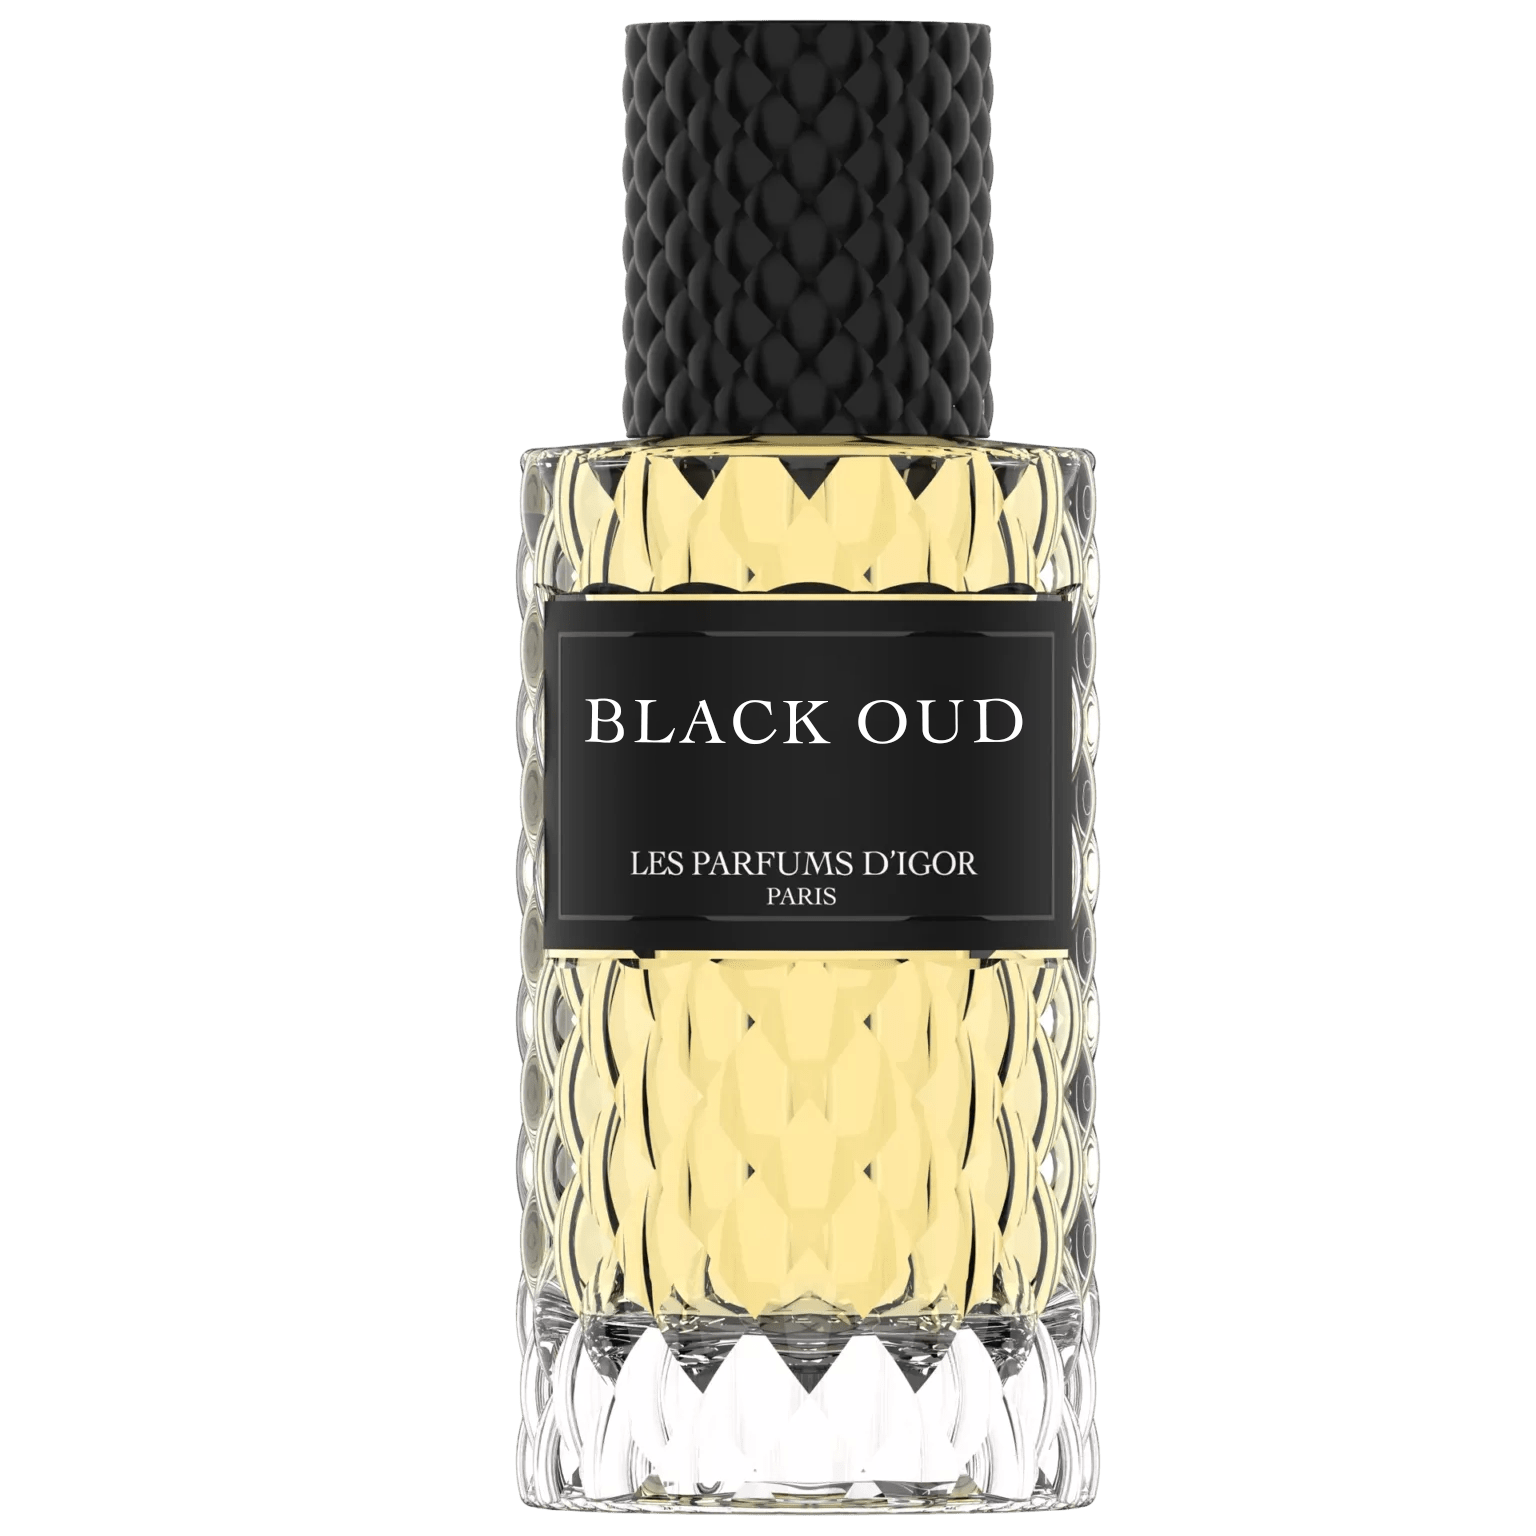 Black Oud - Les parfums d’Igor